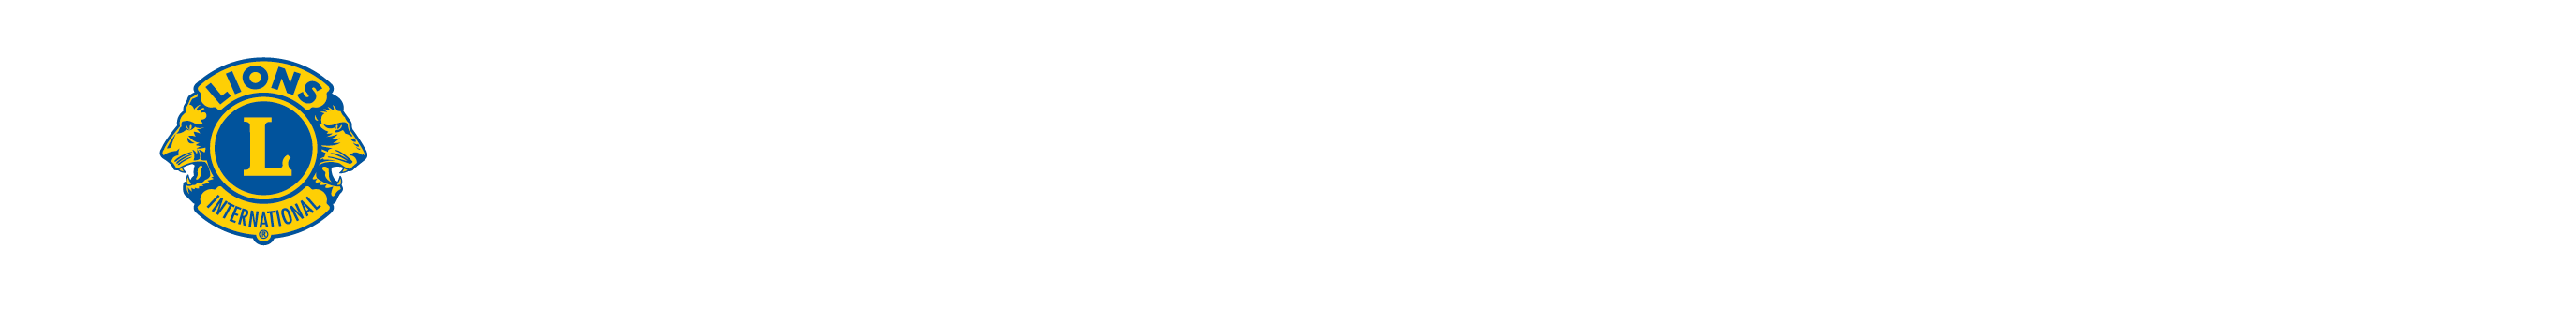 Multiple District 4 California Lions